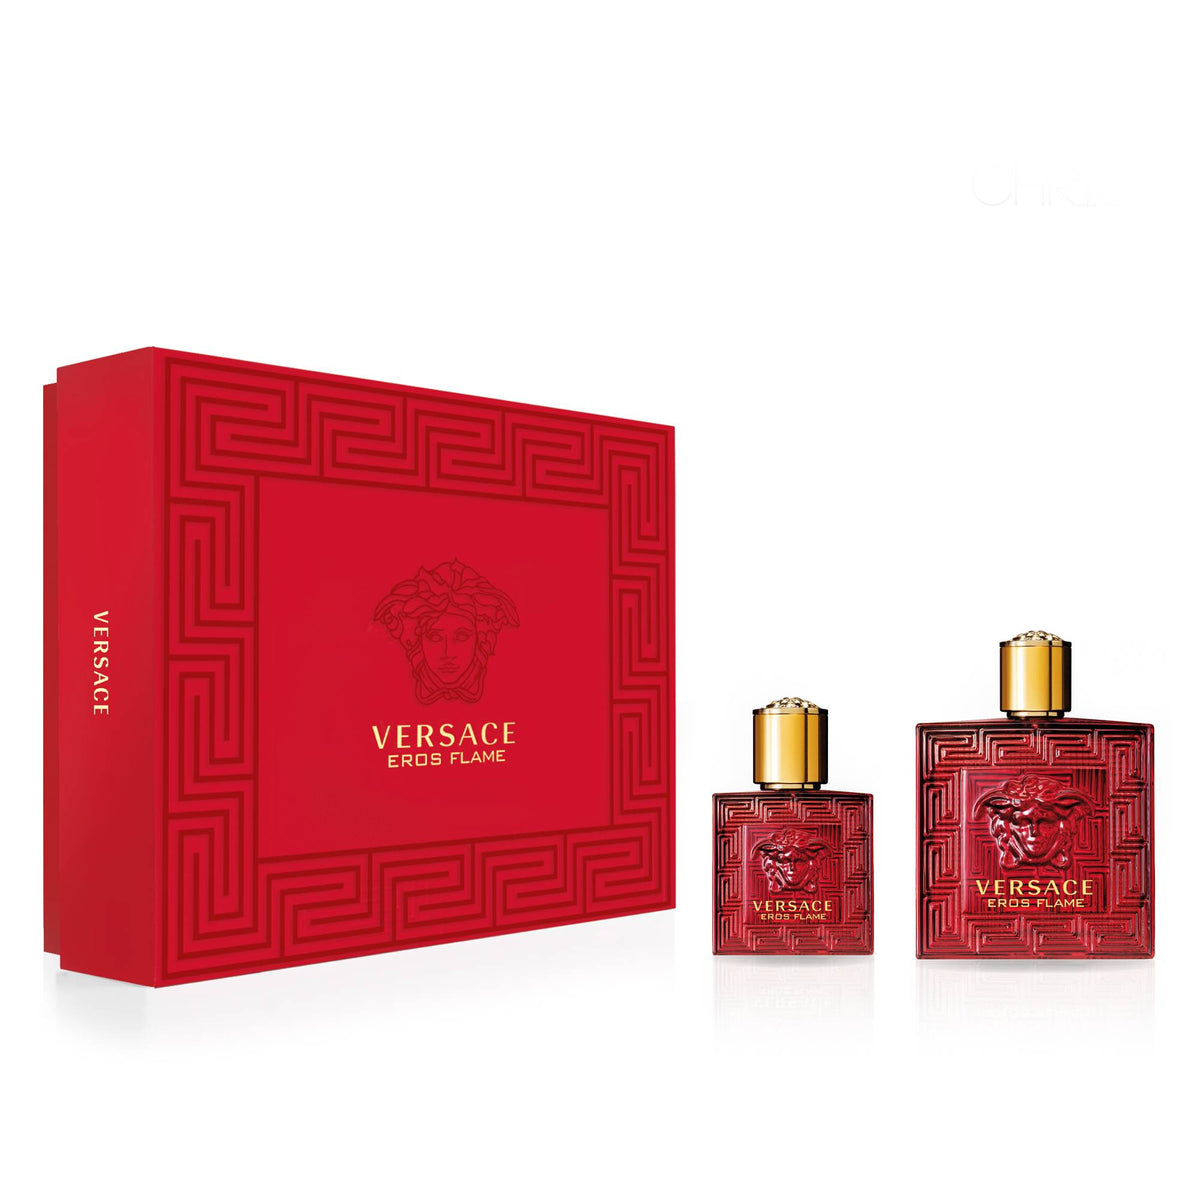 Versace Eros Flame 100ml Gift Set